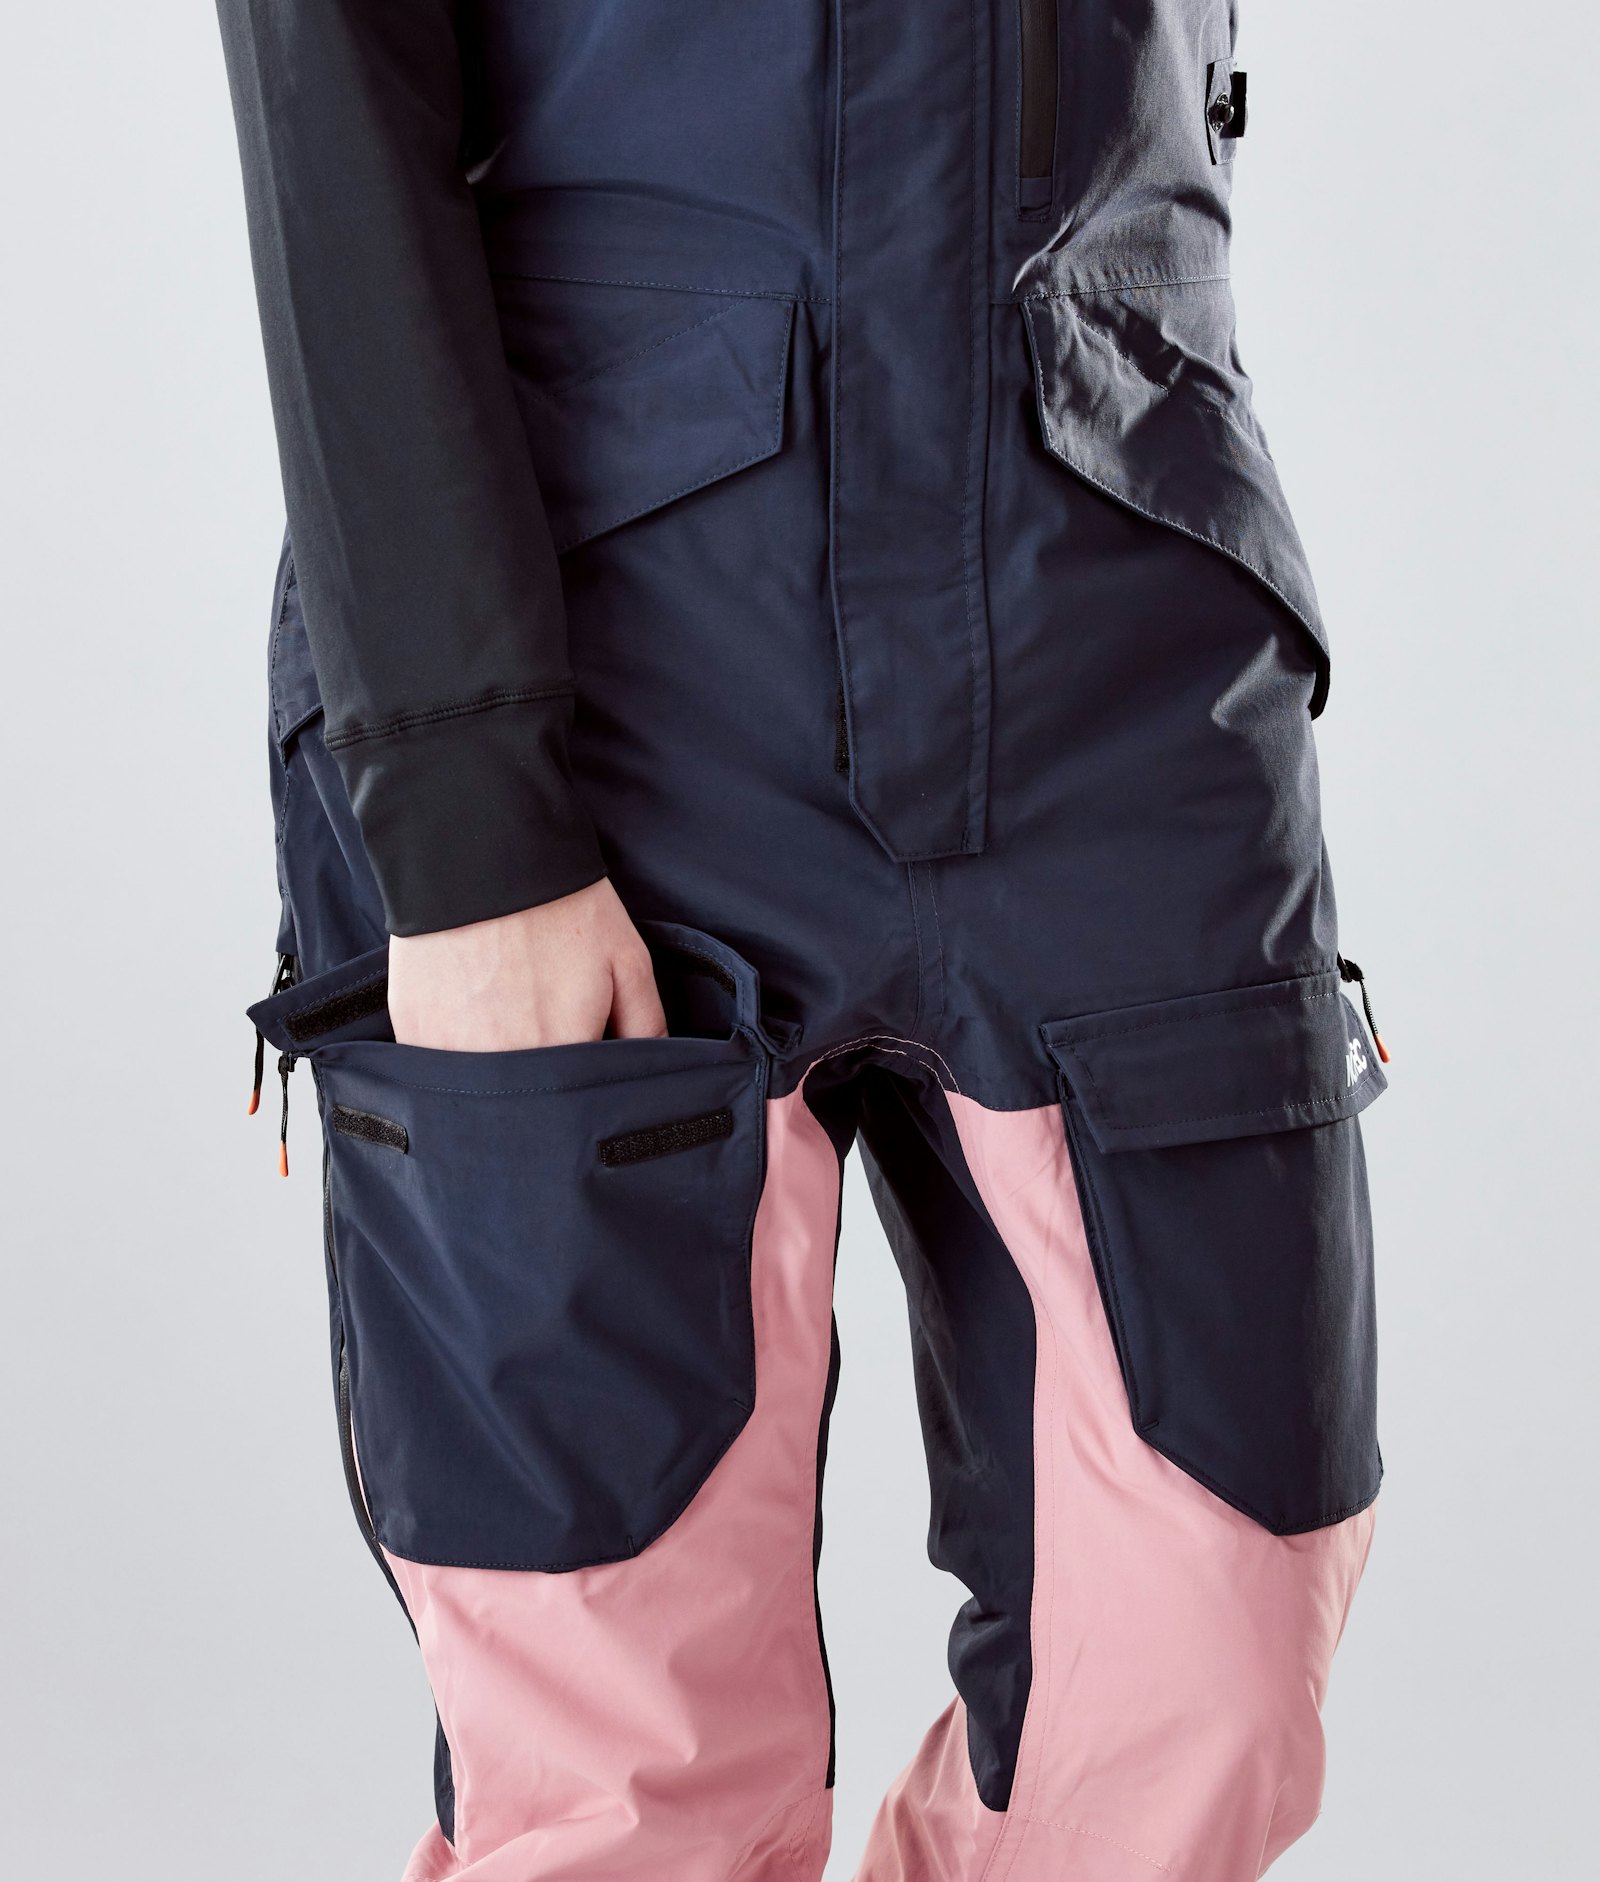 Montec Fawk W 2020 Kalhoty na Snowboard Dámské Marine/Pink/Light Grey